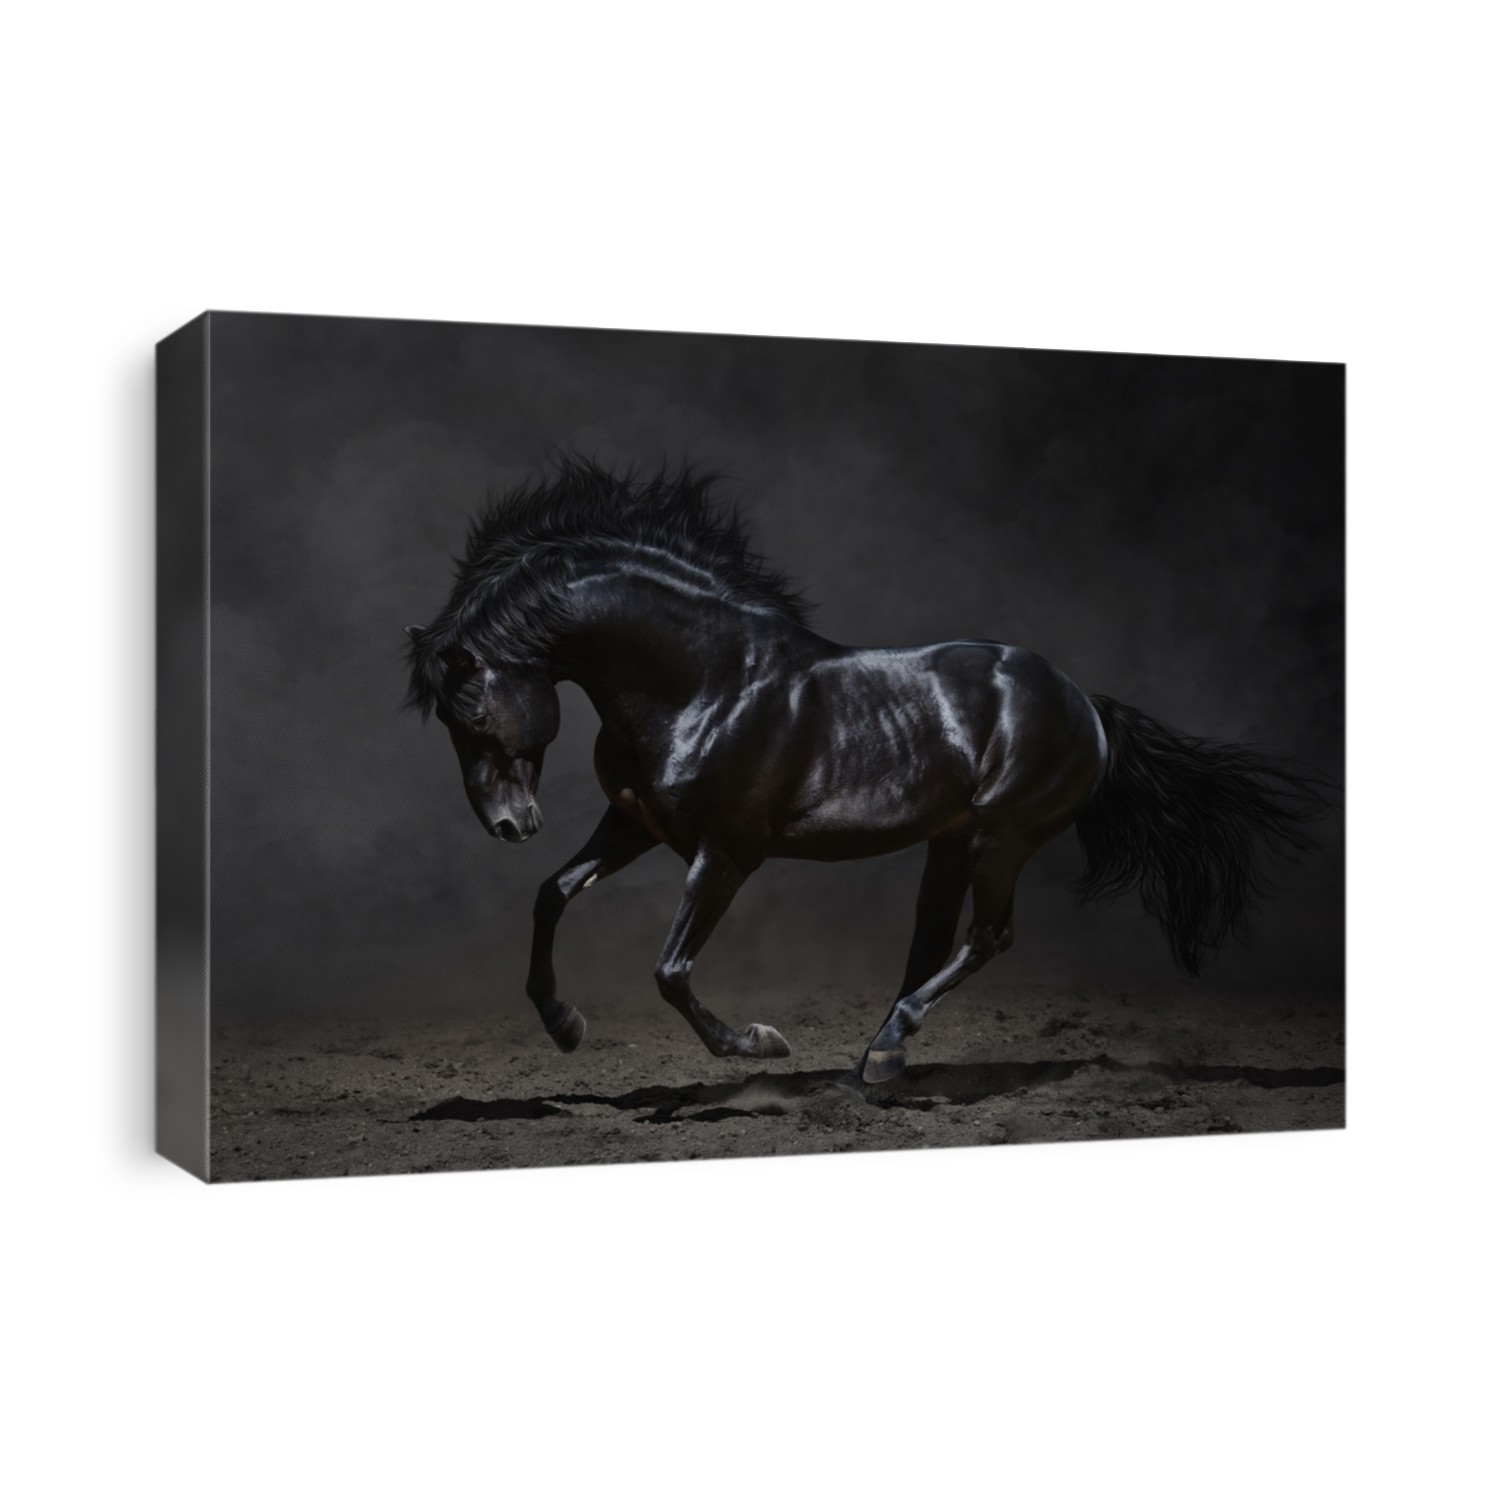 Galloping black horse on dark background.